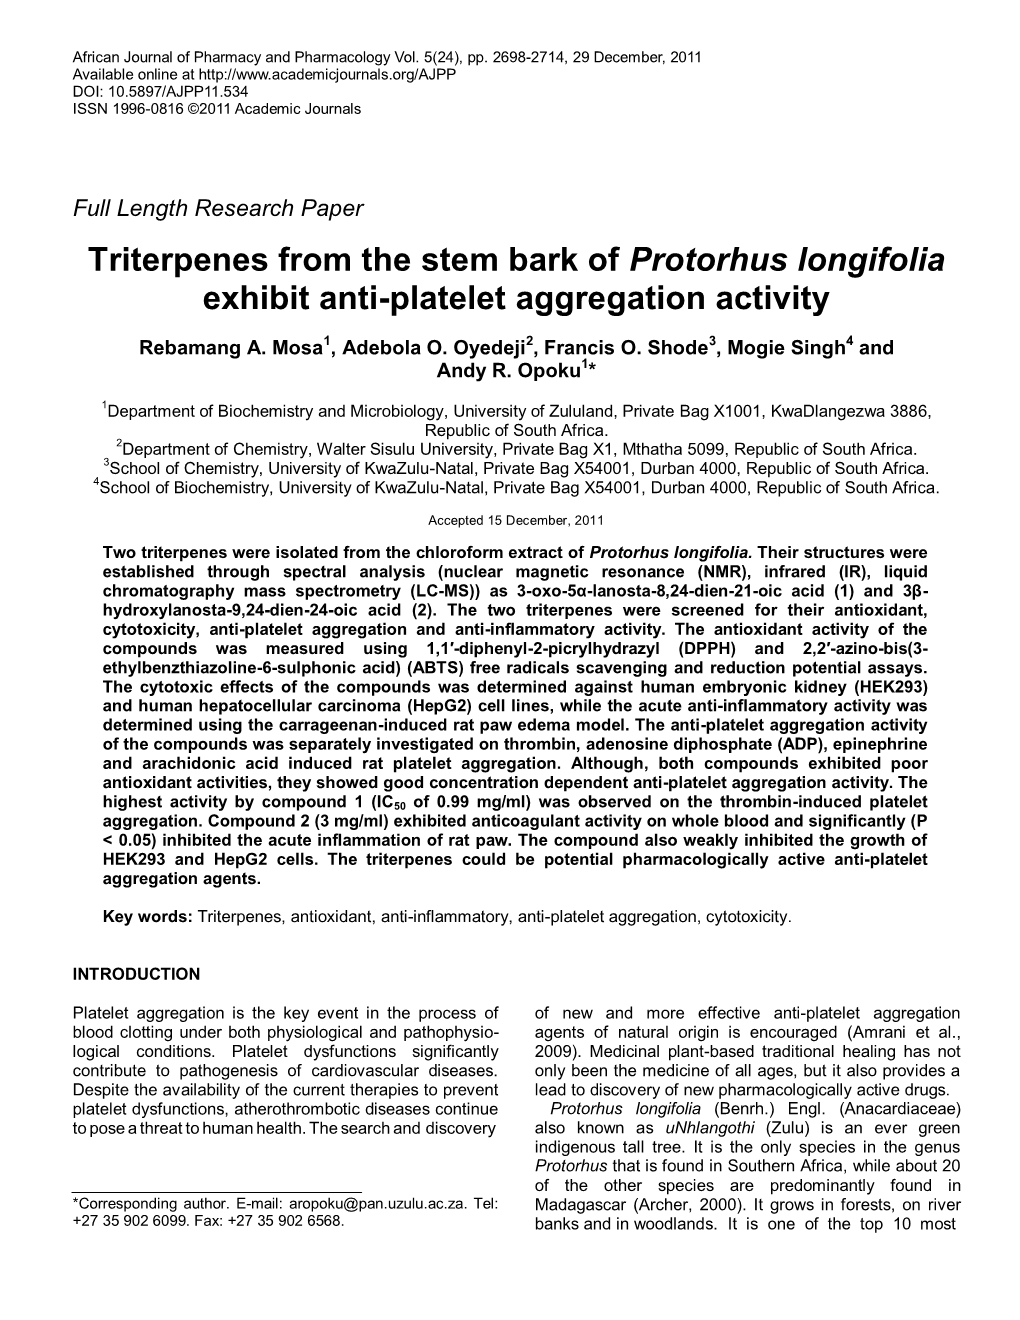 Triterpenes from the Stem Bark of Protorhus Longifolia Exhibit Anti-Platelet Aggregation Activity